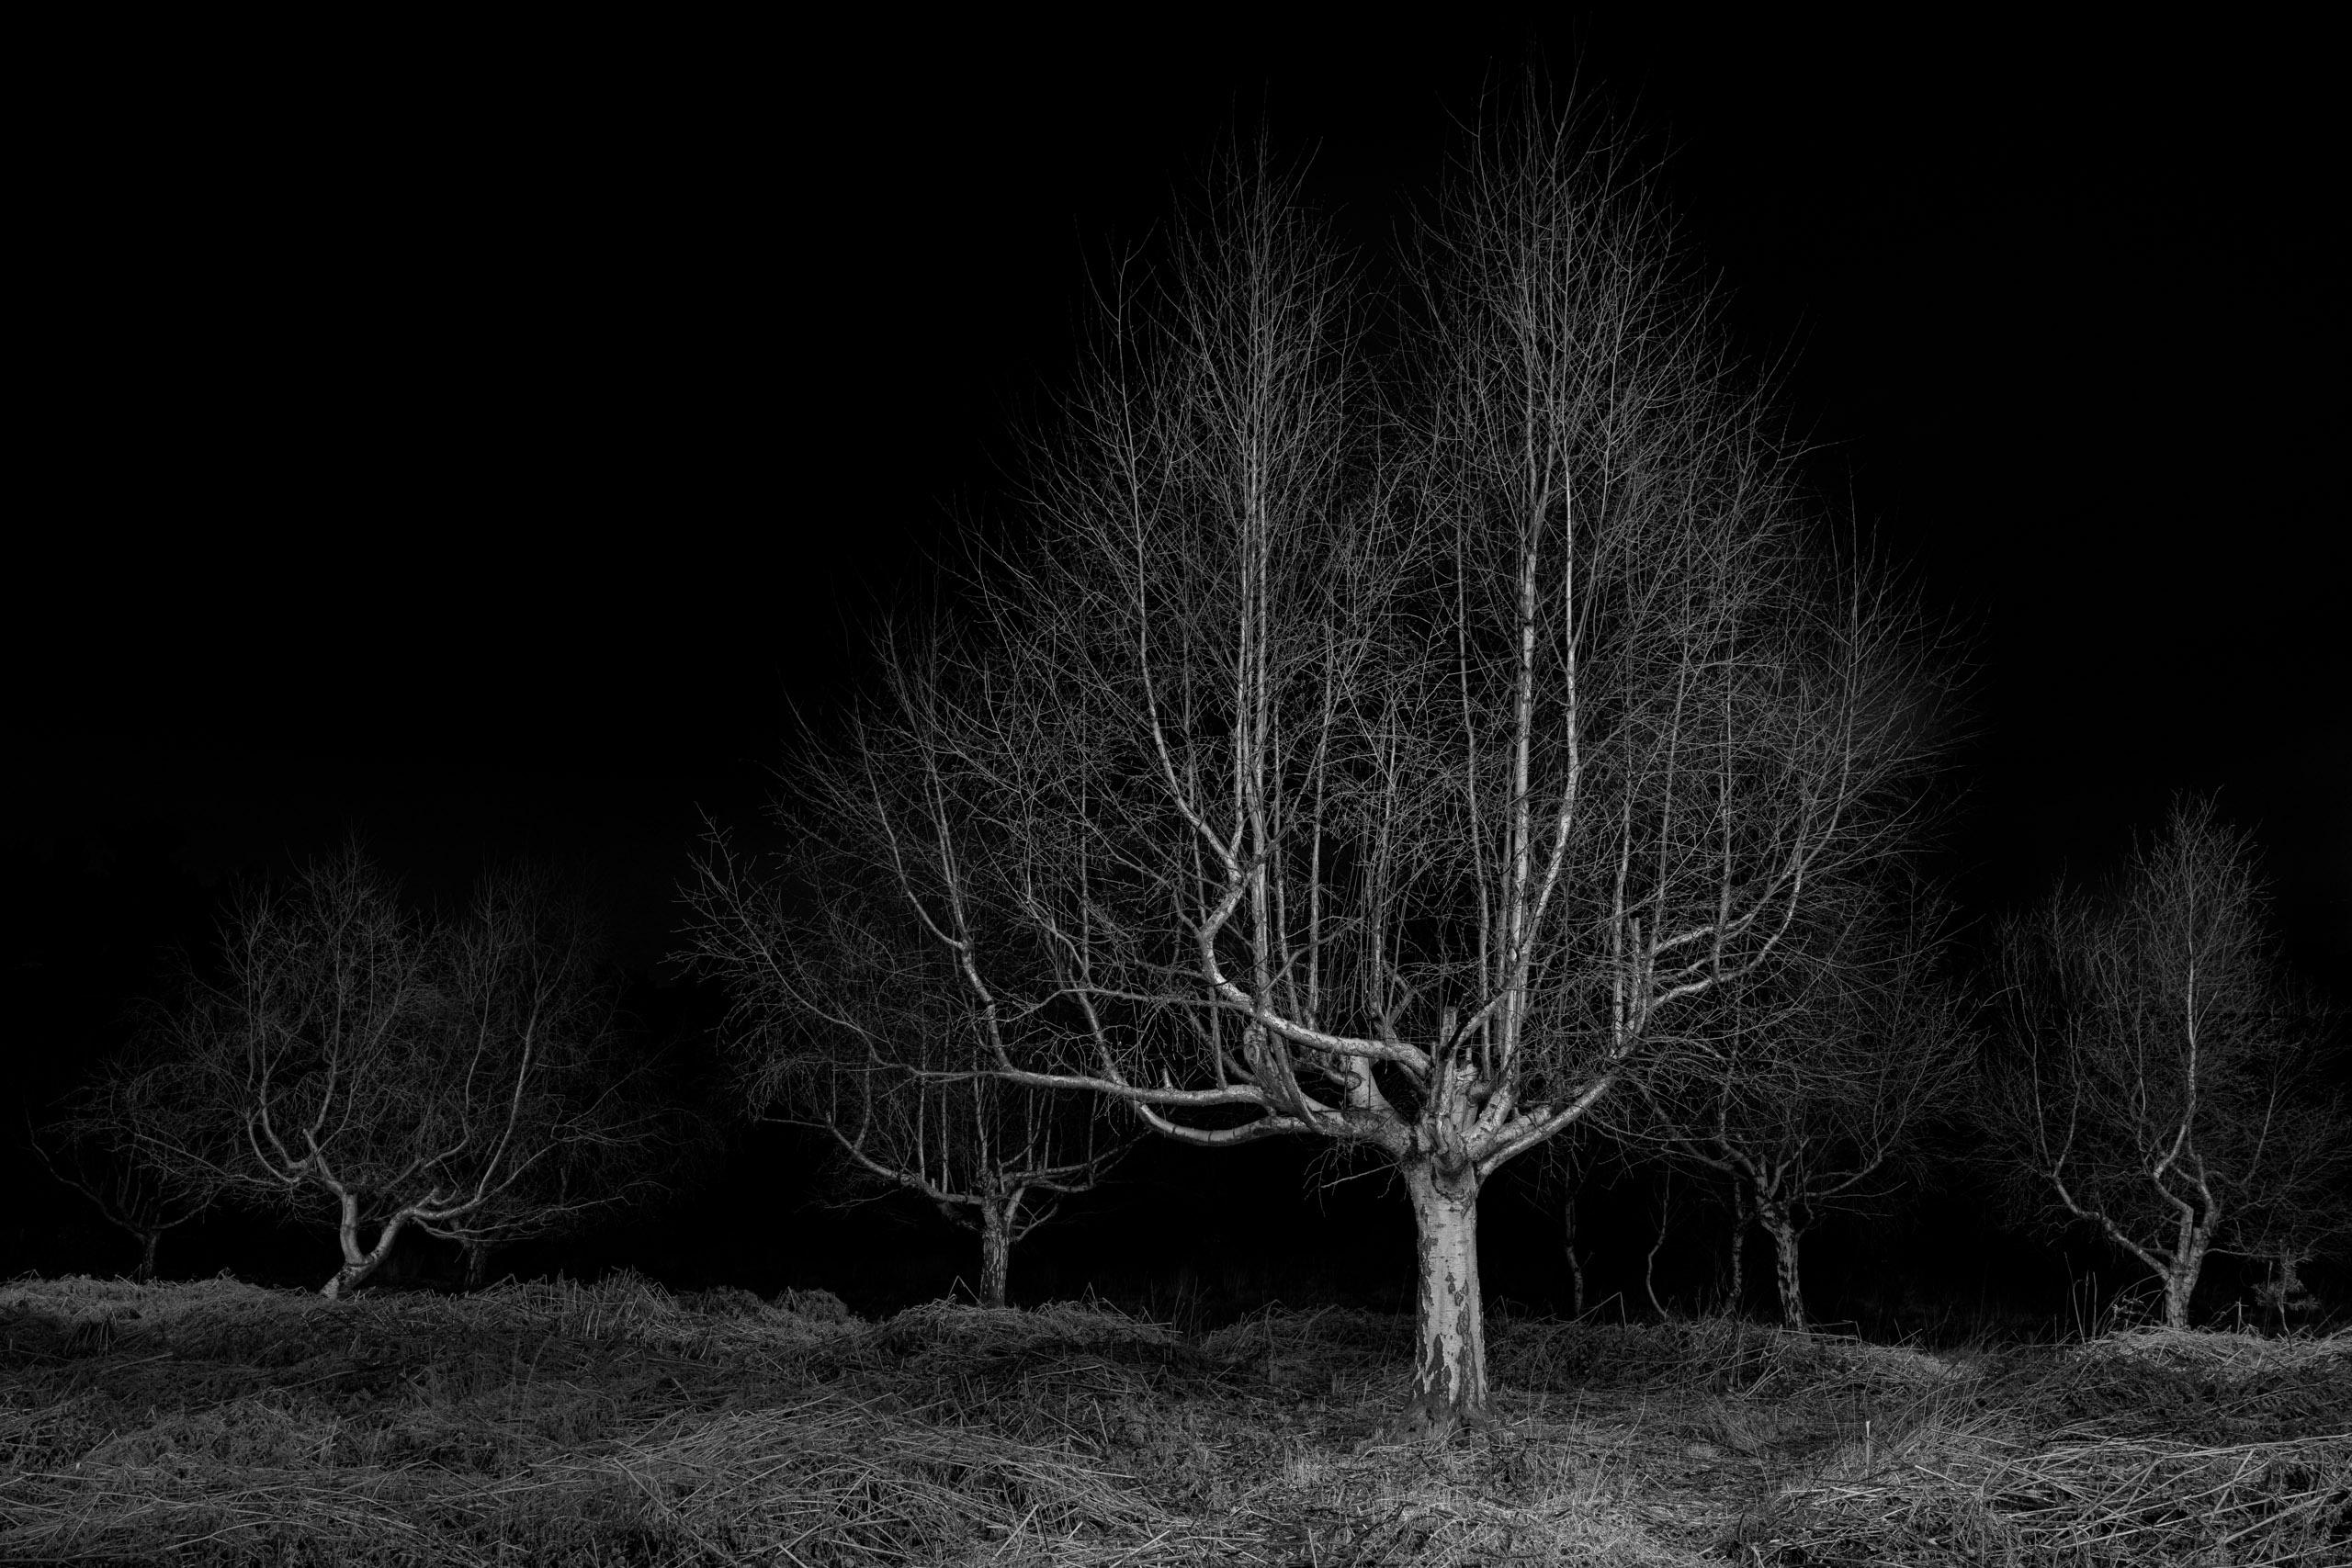 Twilight #19, Gathering - Silver Birch Tree - Black and White Landscape Print